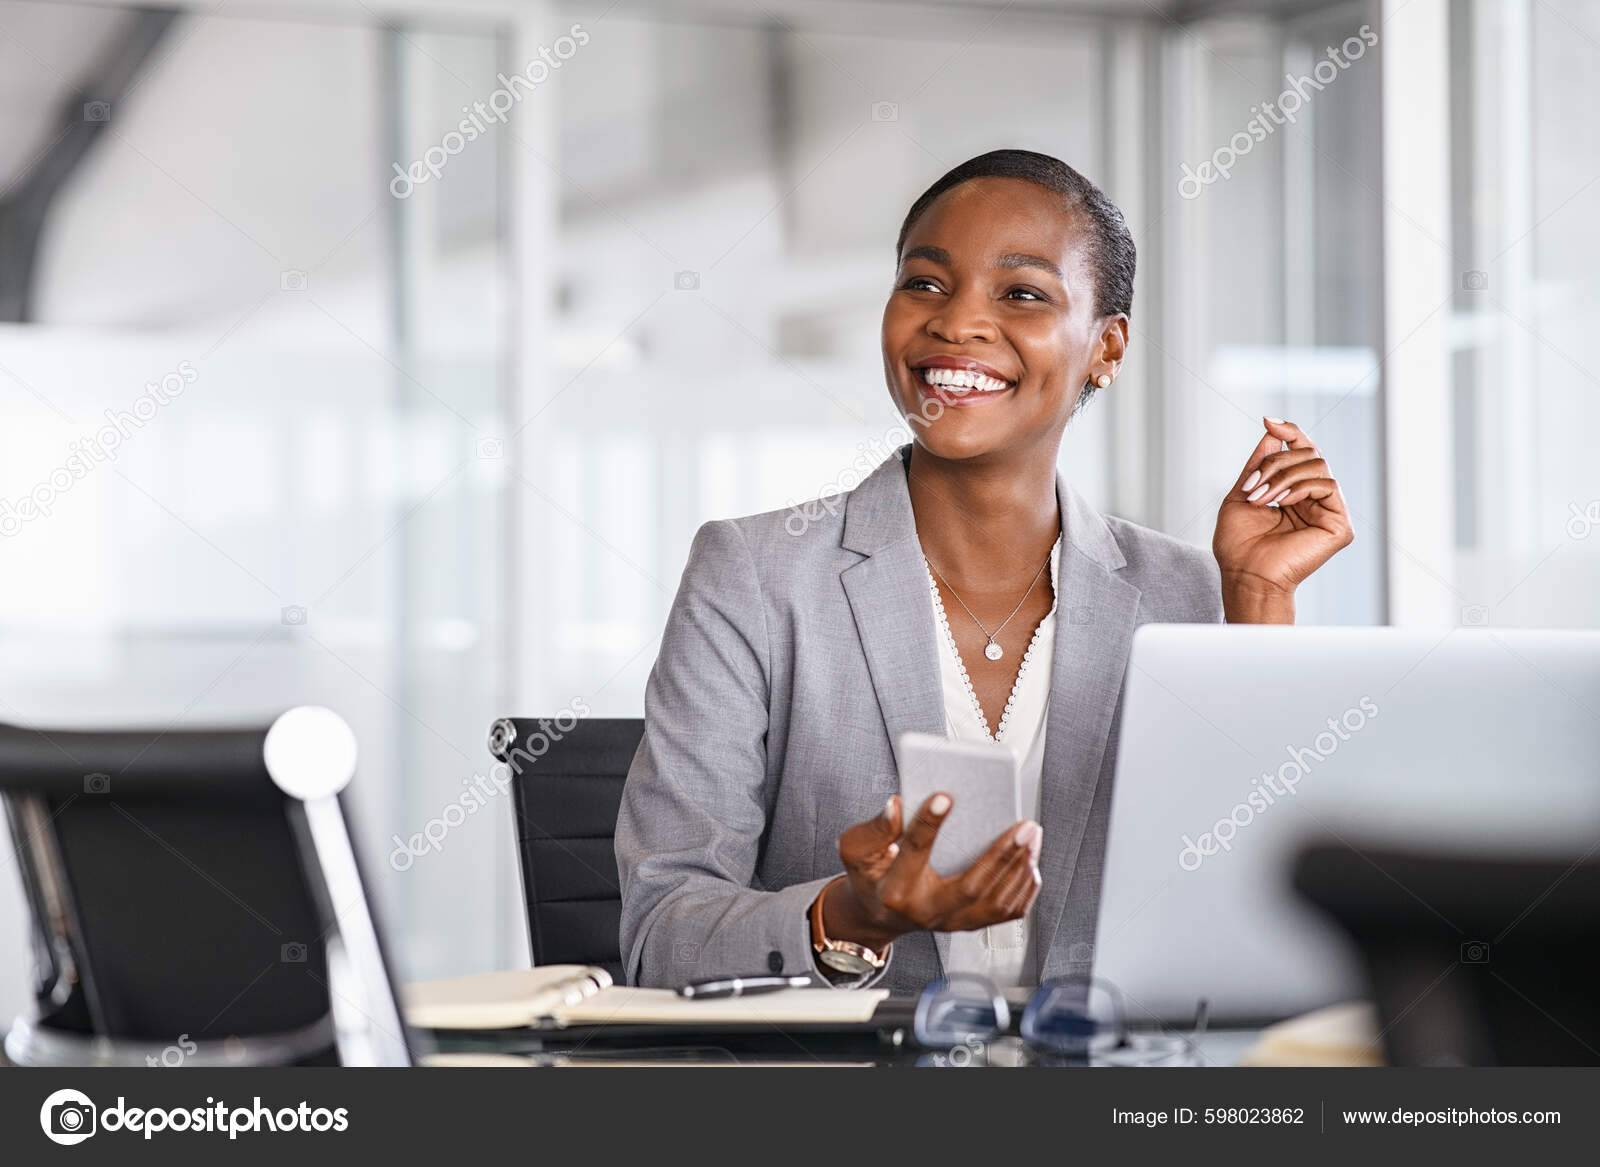 https://st.depositphotos.com/1743476/59802/i/1600/depositphotos_598023862-stock-photo-african-black-business-woman-using.jpg